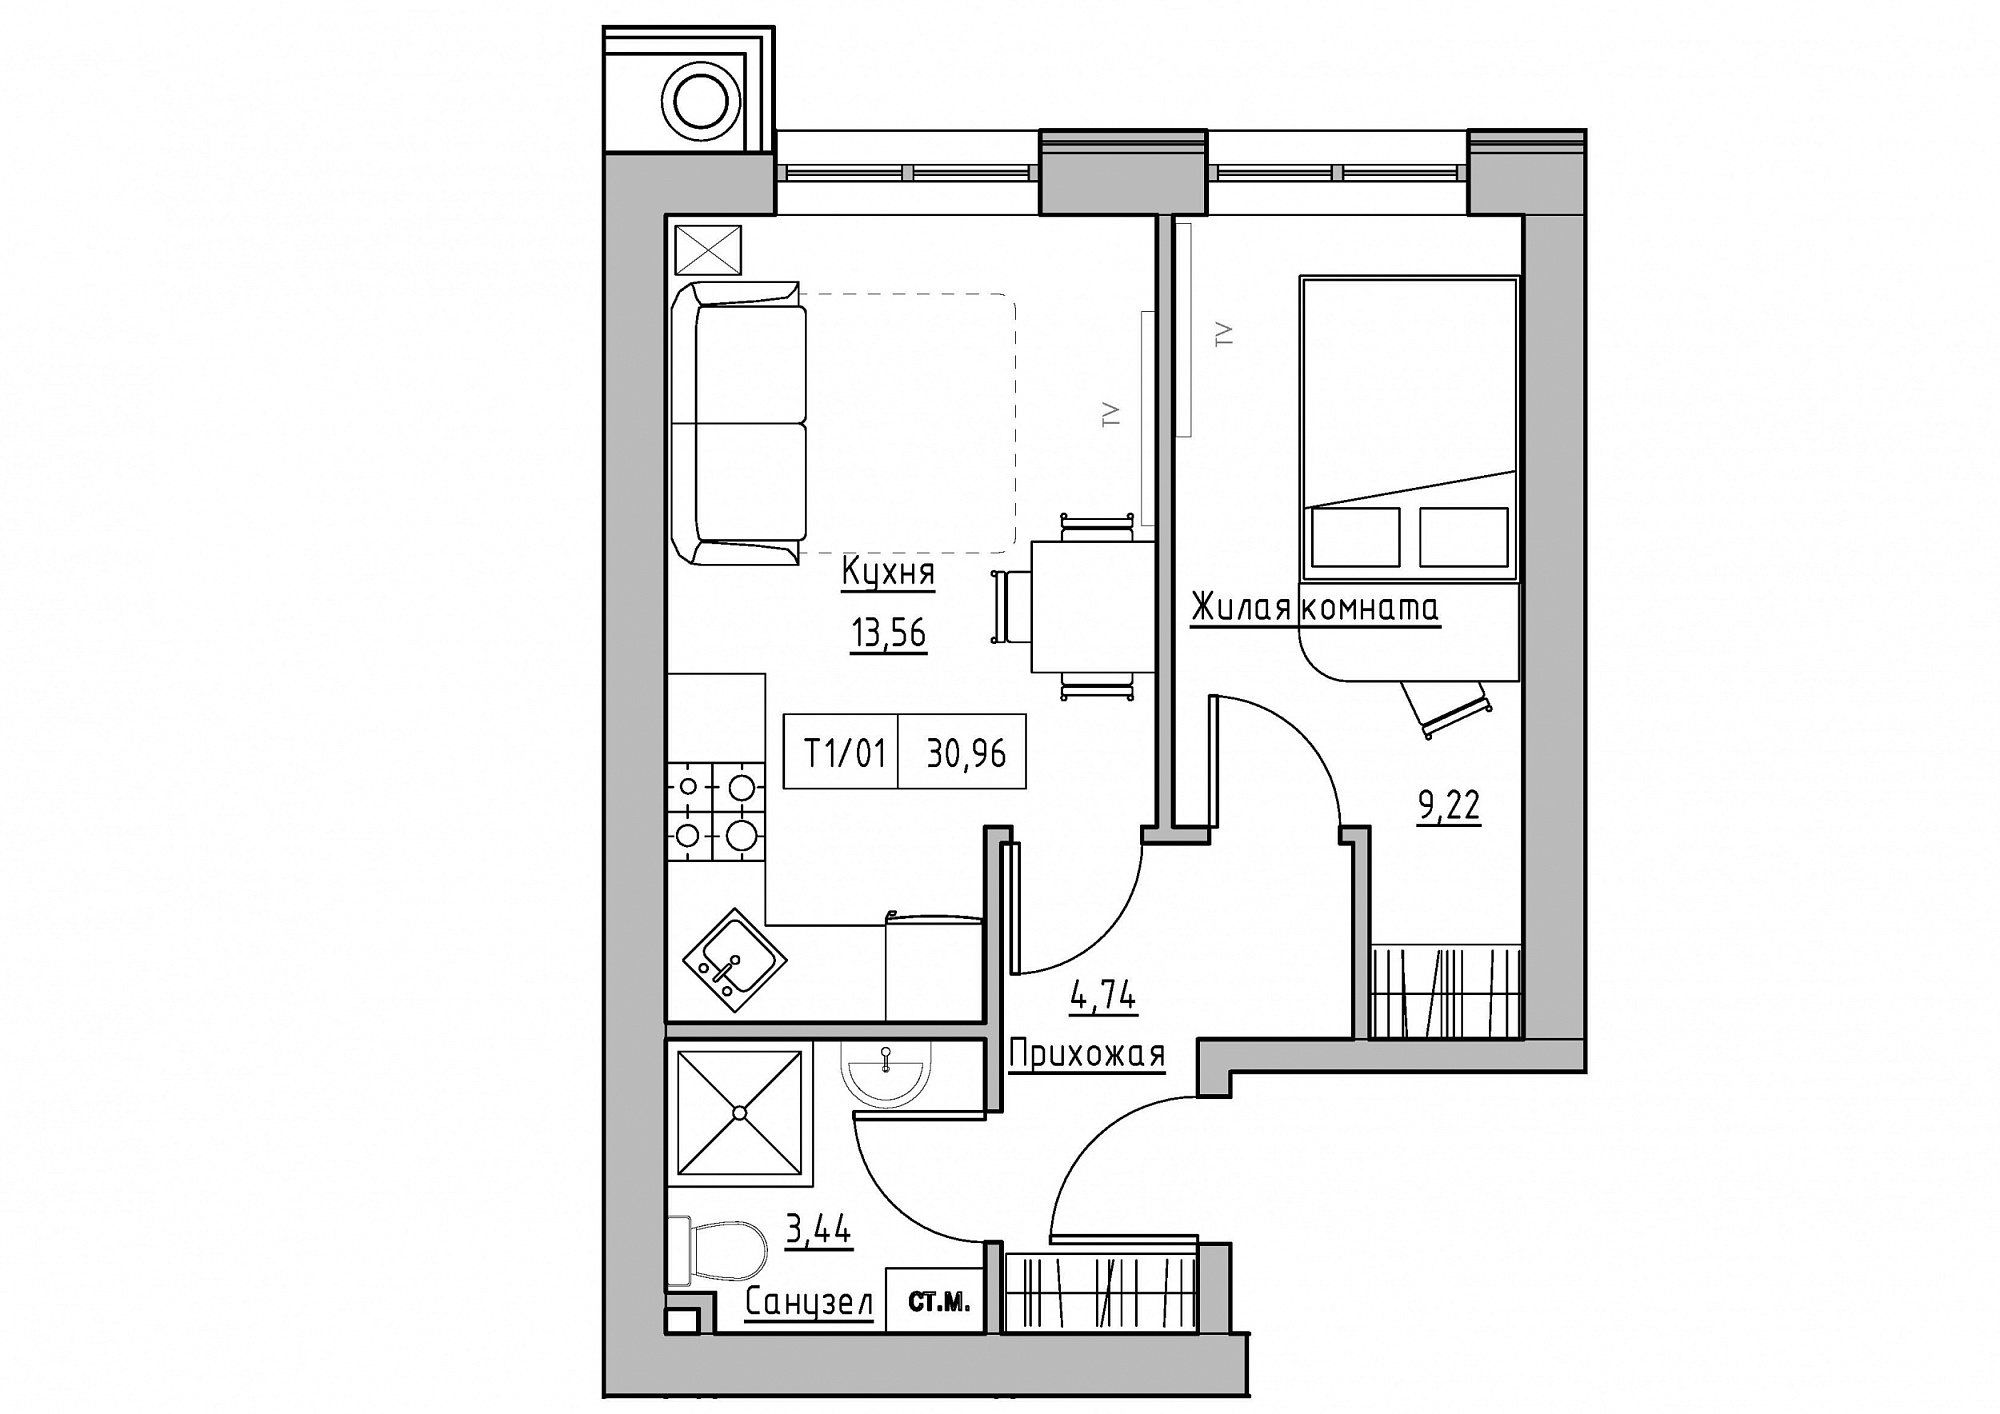 Planning 1-rm flats area 30.96m2, KS-011-01/0013.